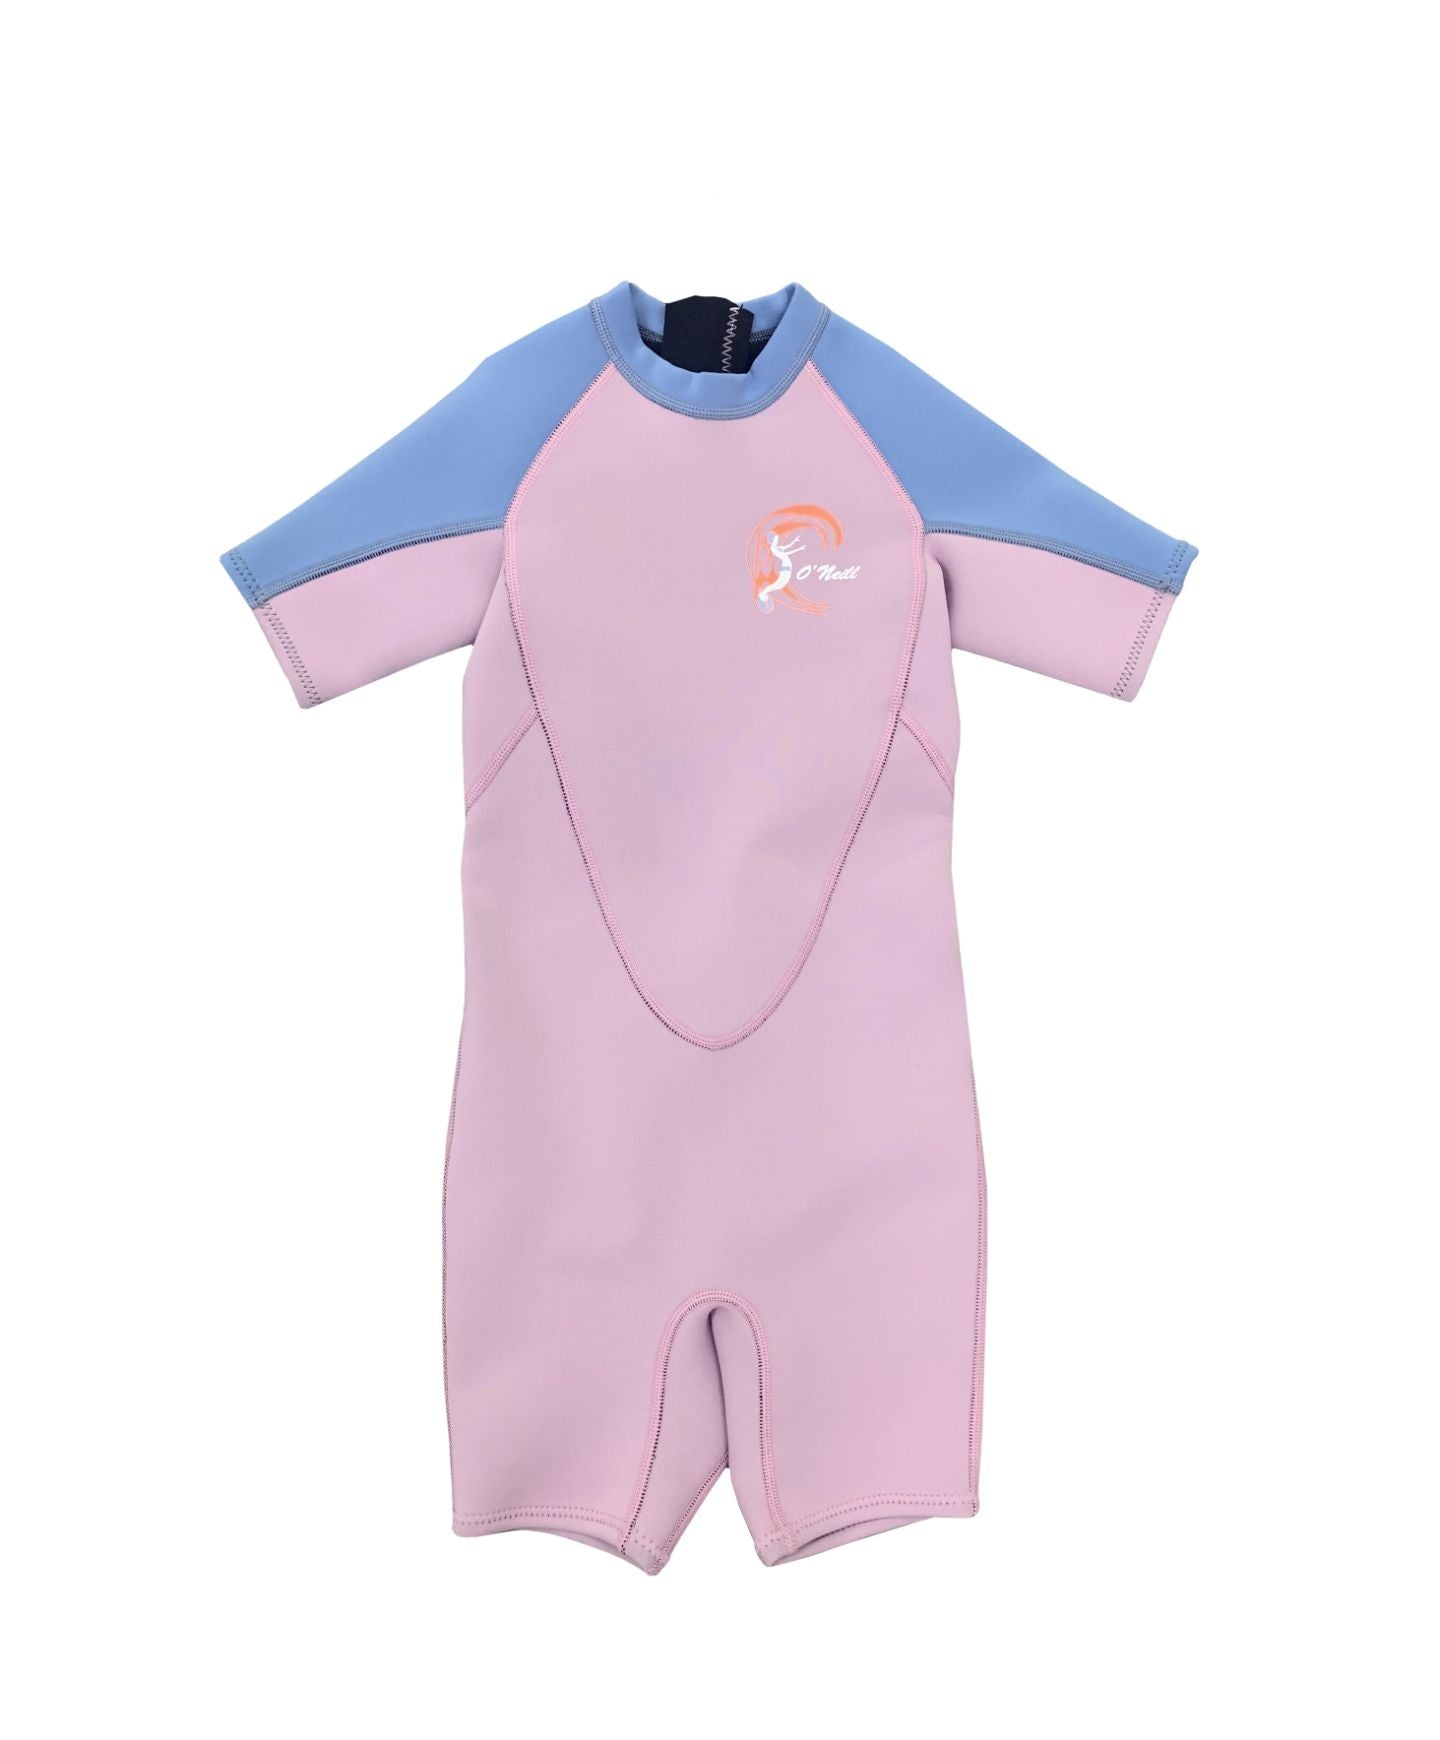 Toddler Reactor Spring Suit Wetsuit - Pink